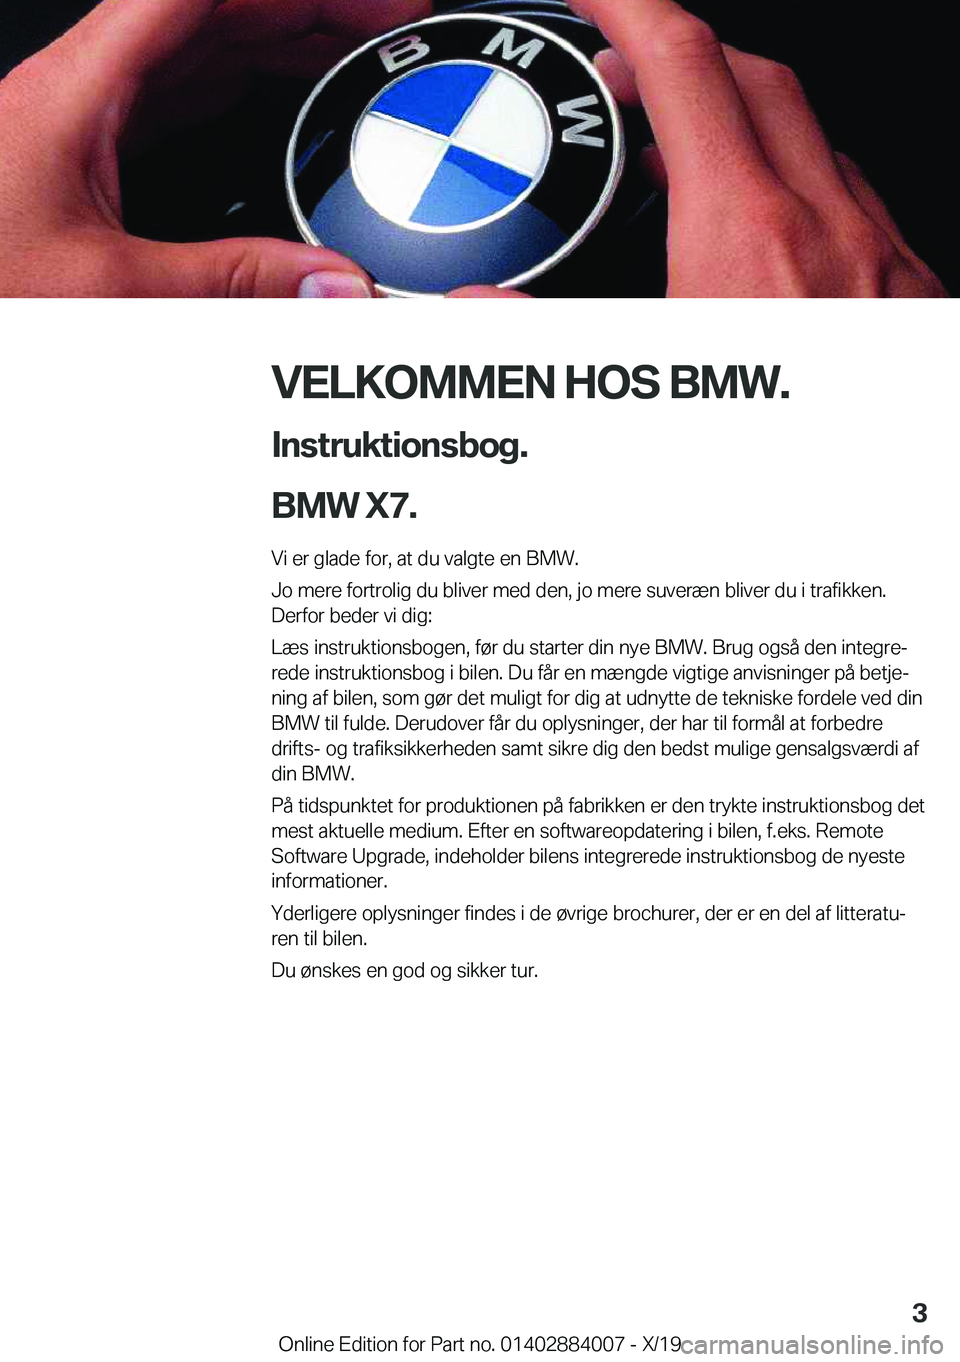 BMW X7 2020  InstruktionsbØger (in Danish) �V�E�L�K�O�M�M�E�N��H�O�S��B�M�W�.
�I�n�s�t�r�u�k�t�i�o�n�s�b�o�g�.
�B�M�W��X�7�. �V�i��e�r��g�l�a�d�e��f�o�r�,��a�t��d�u��v�a�l�g�t�e��e�n��B�M�W�.
�J�o��m�e�r�e��f�o�r�t�r�o�l�i�g��d�u